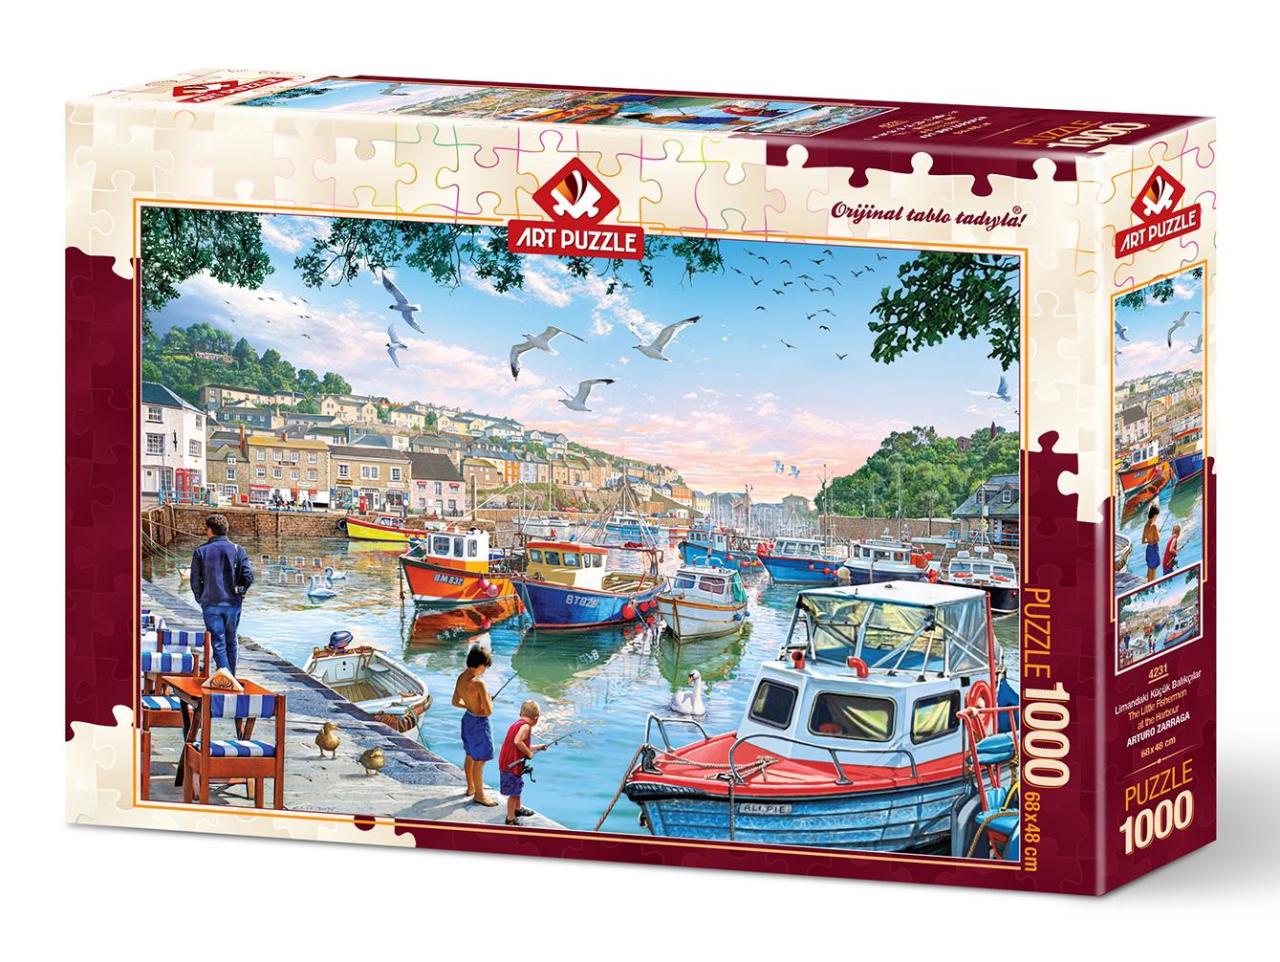 Art Puzzle Limandaki Küçük Balıkçılar 1000 Parça Puzzle